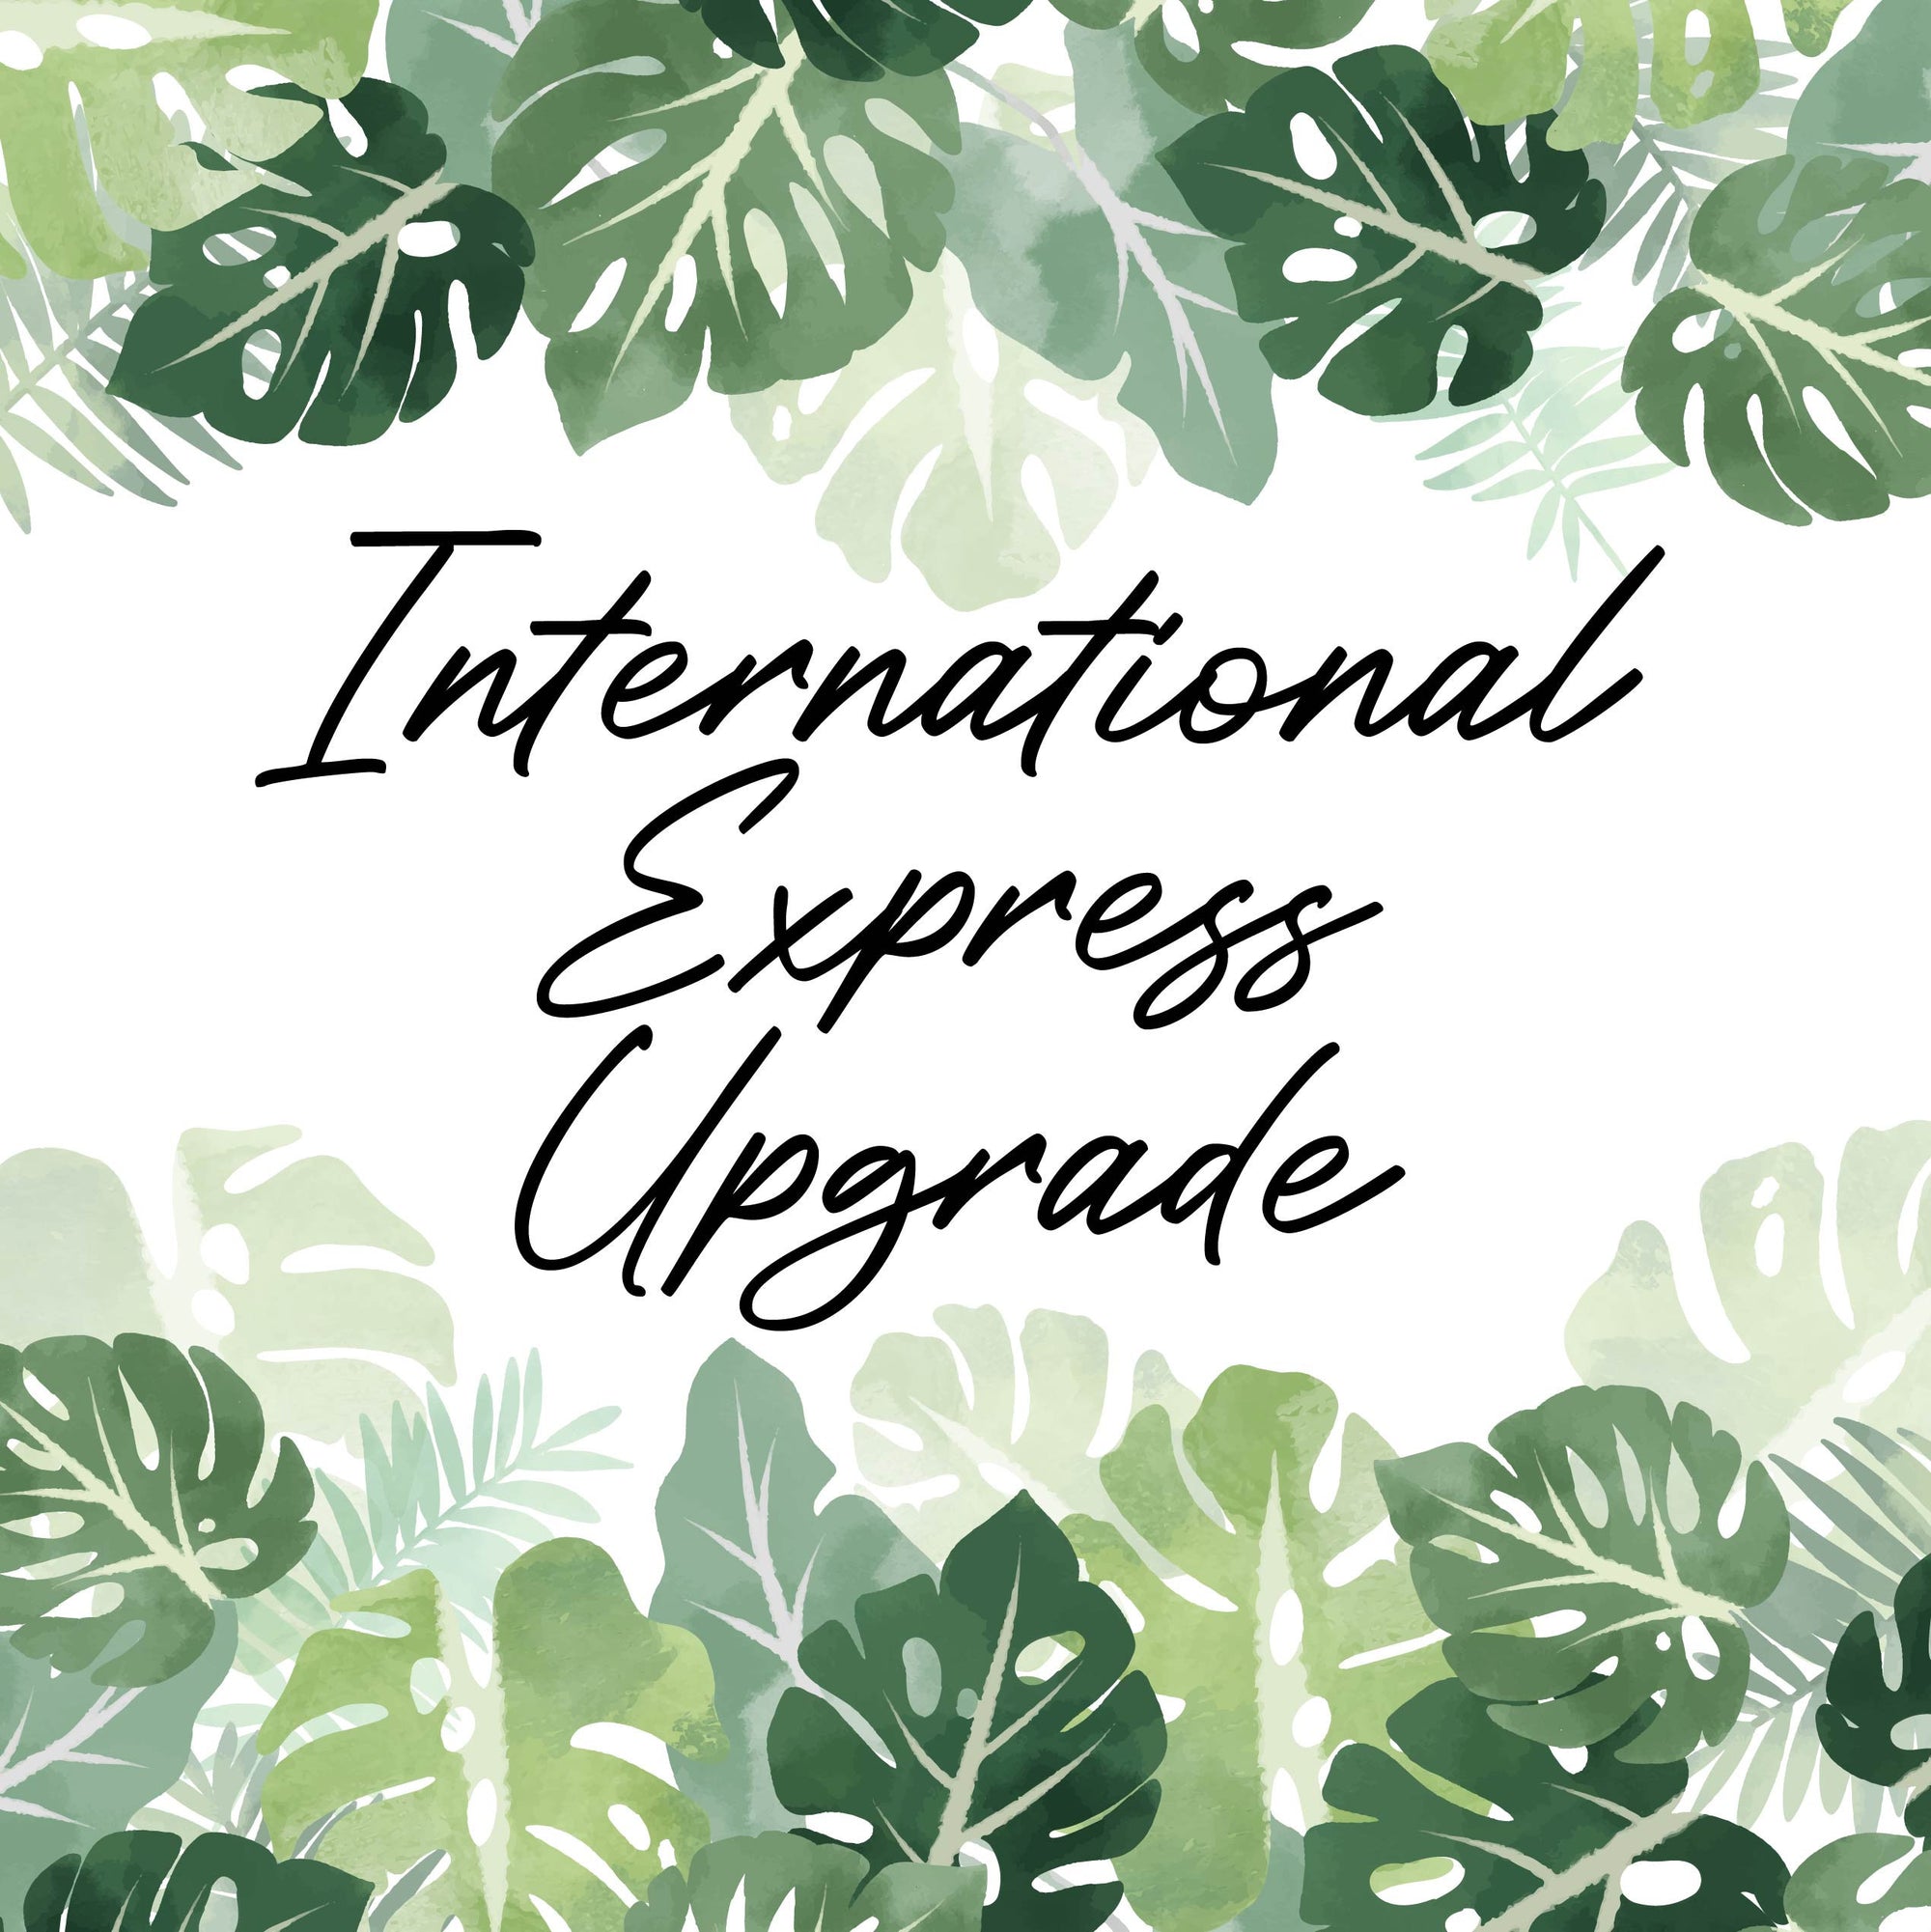 International Express Post Shipping Upgrade